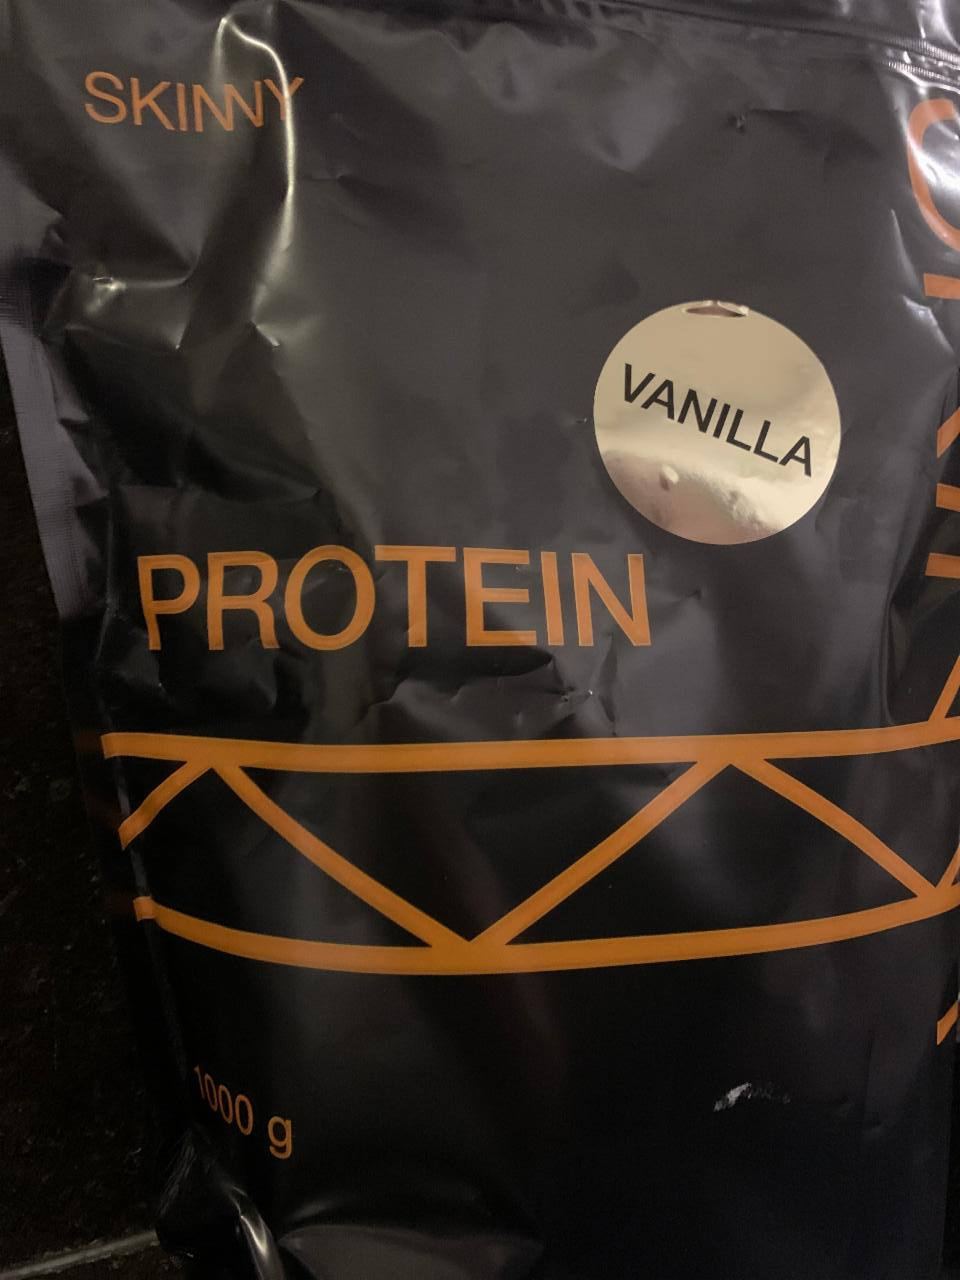 Fotografie - Protein Vanilla Skinny